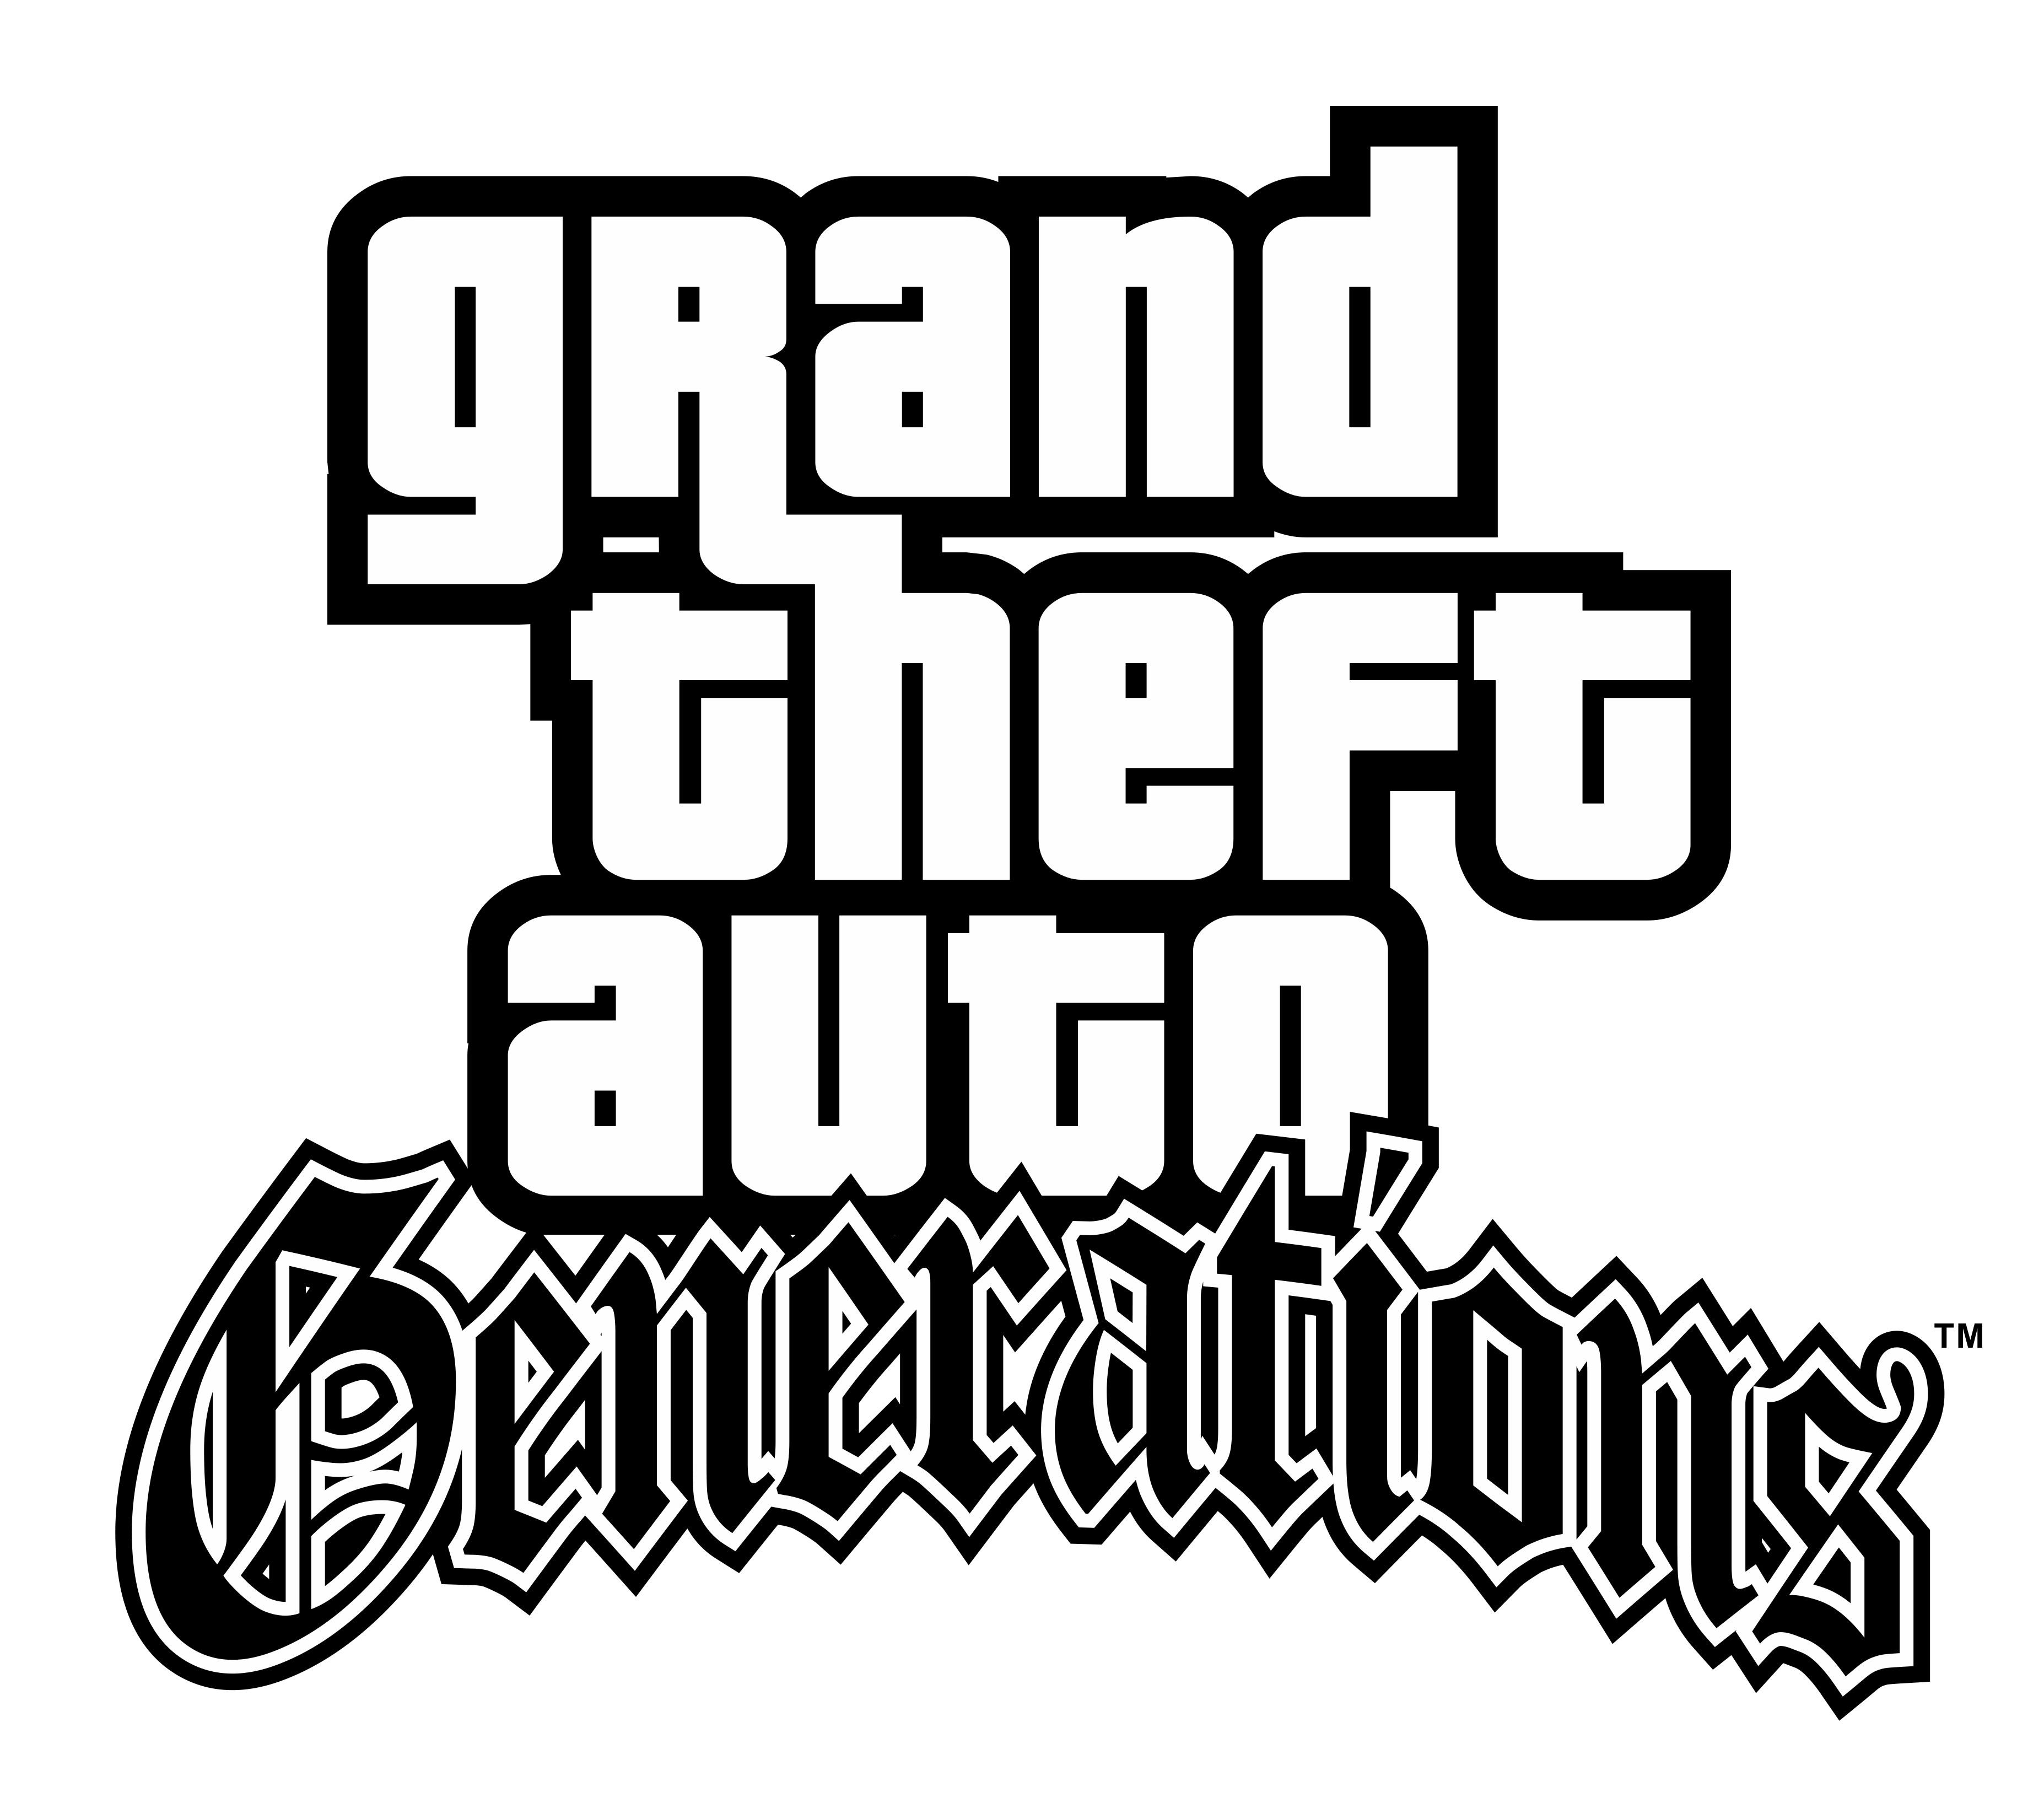 SA/PS2] GTA Generations (Brazilian GTA for PS2) - MixMods